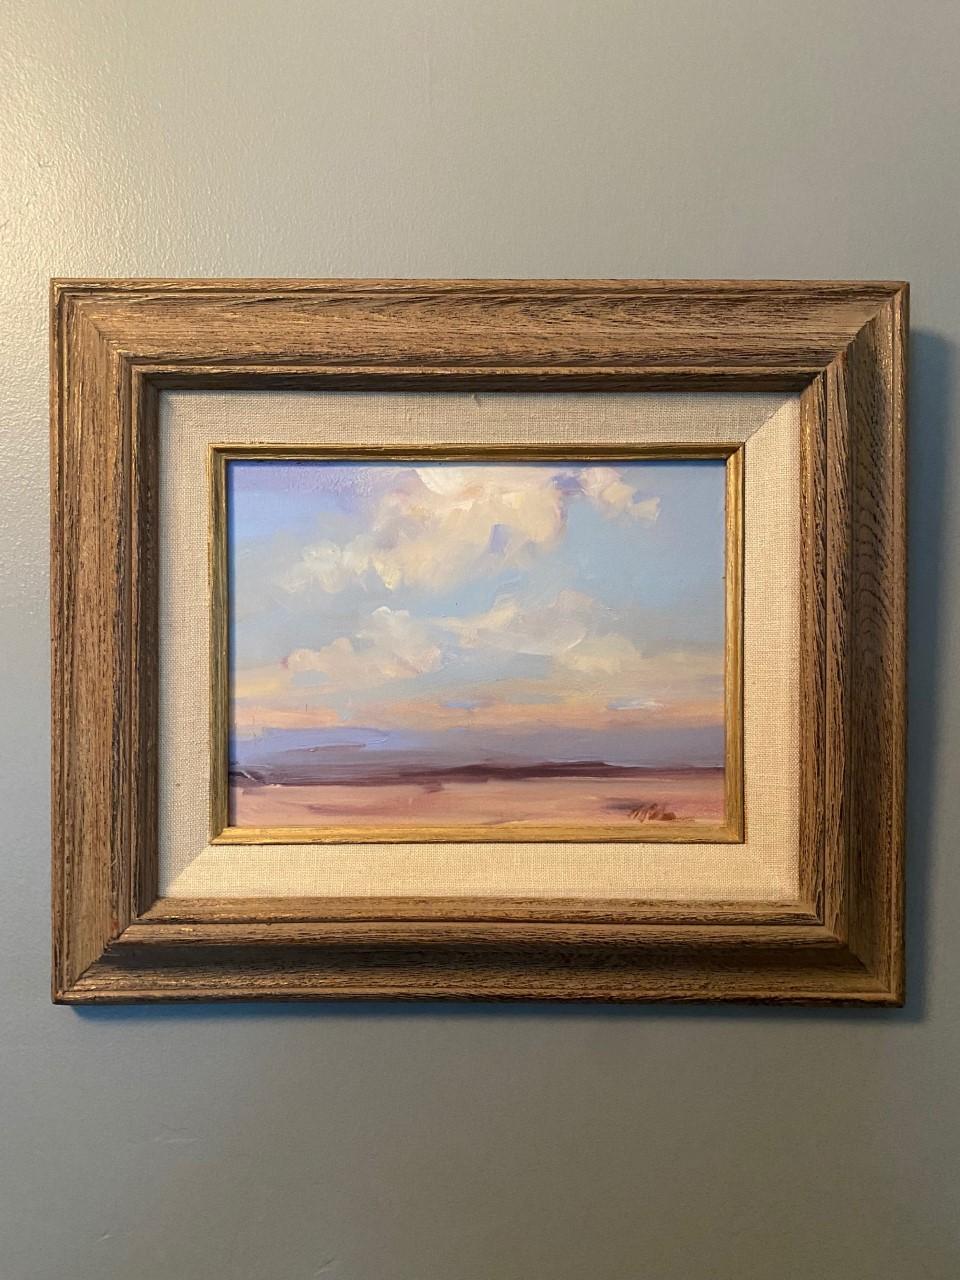 Painted Vintage George Pate “New Mexico Desert” Original Painting